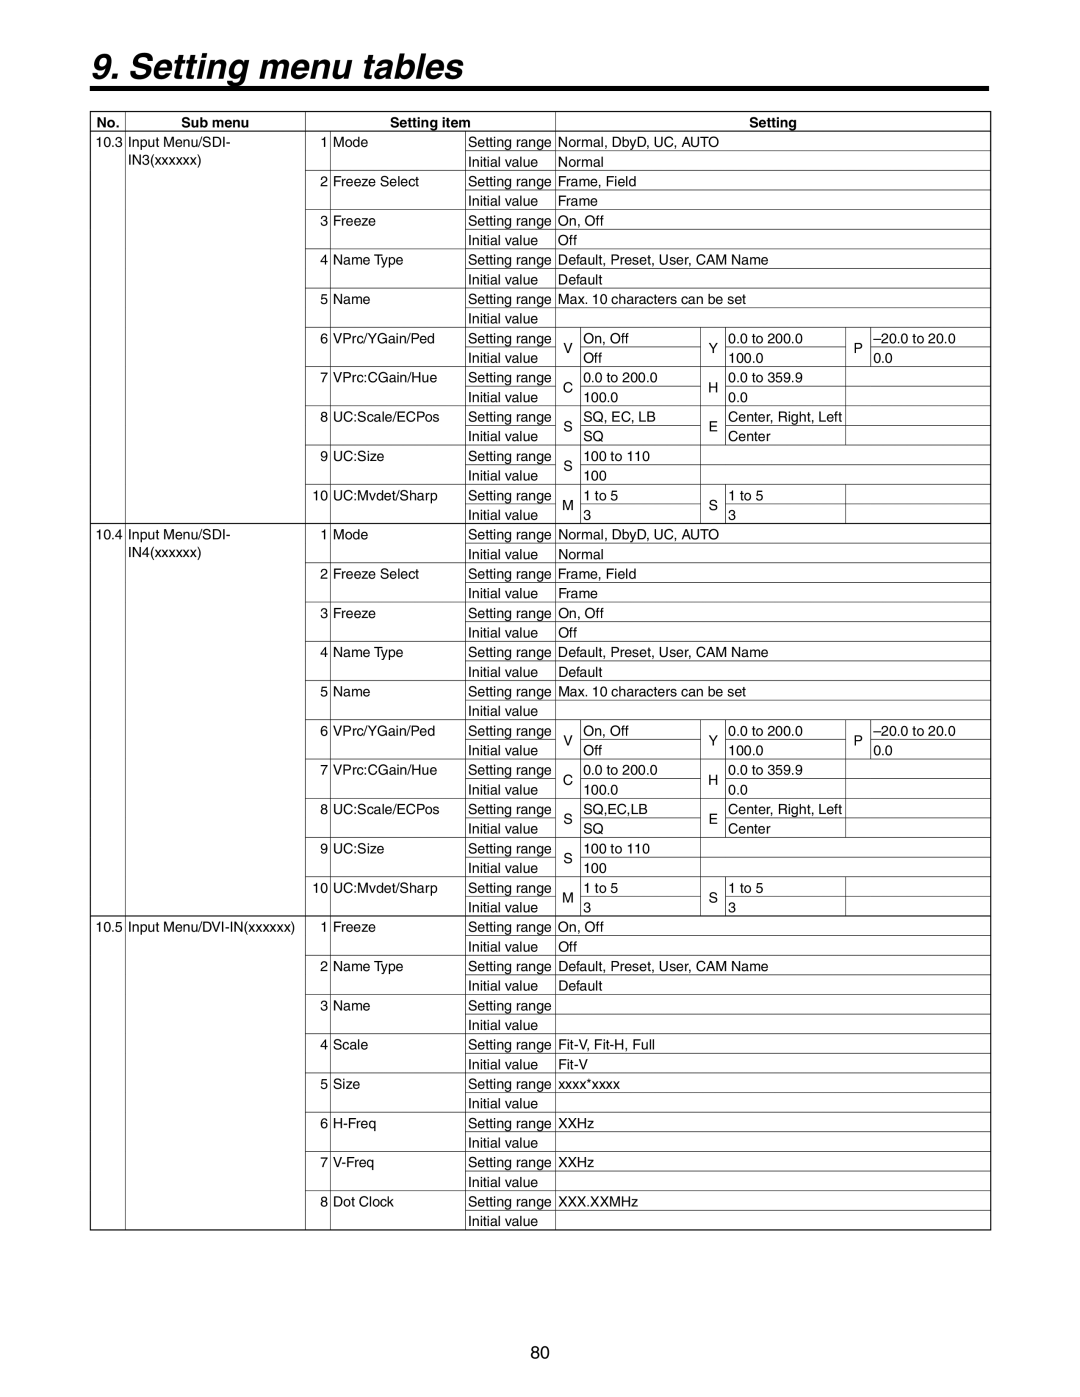 Panasonic AW-HS50N operating instructions Setting menu tables, 10.3Input Menu/SDI- IN3xxxxxx, Setting item 